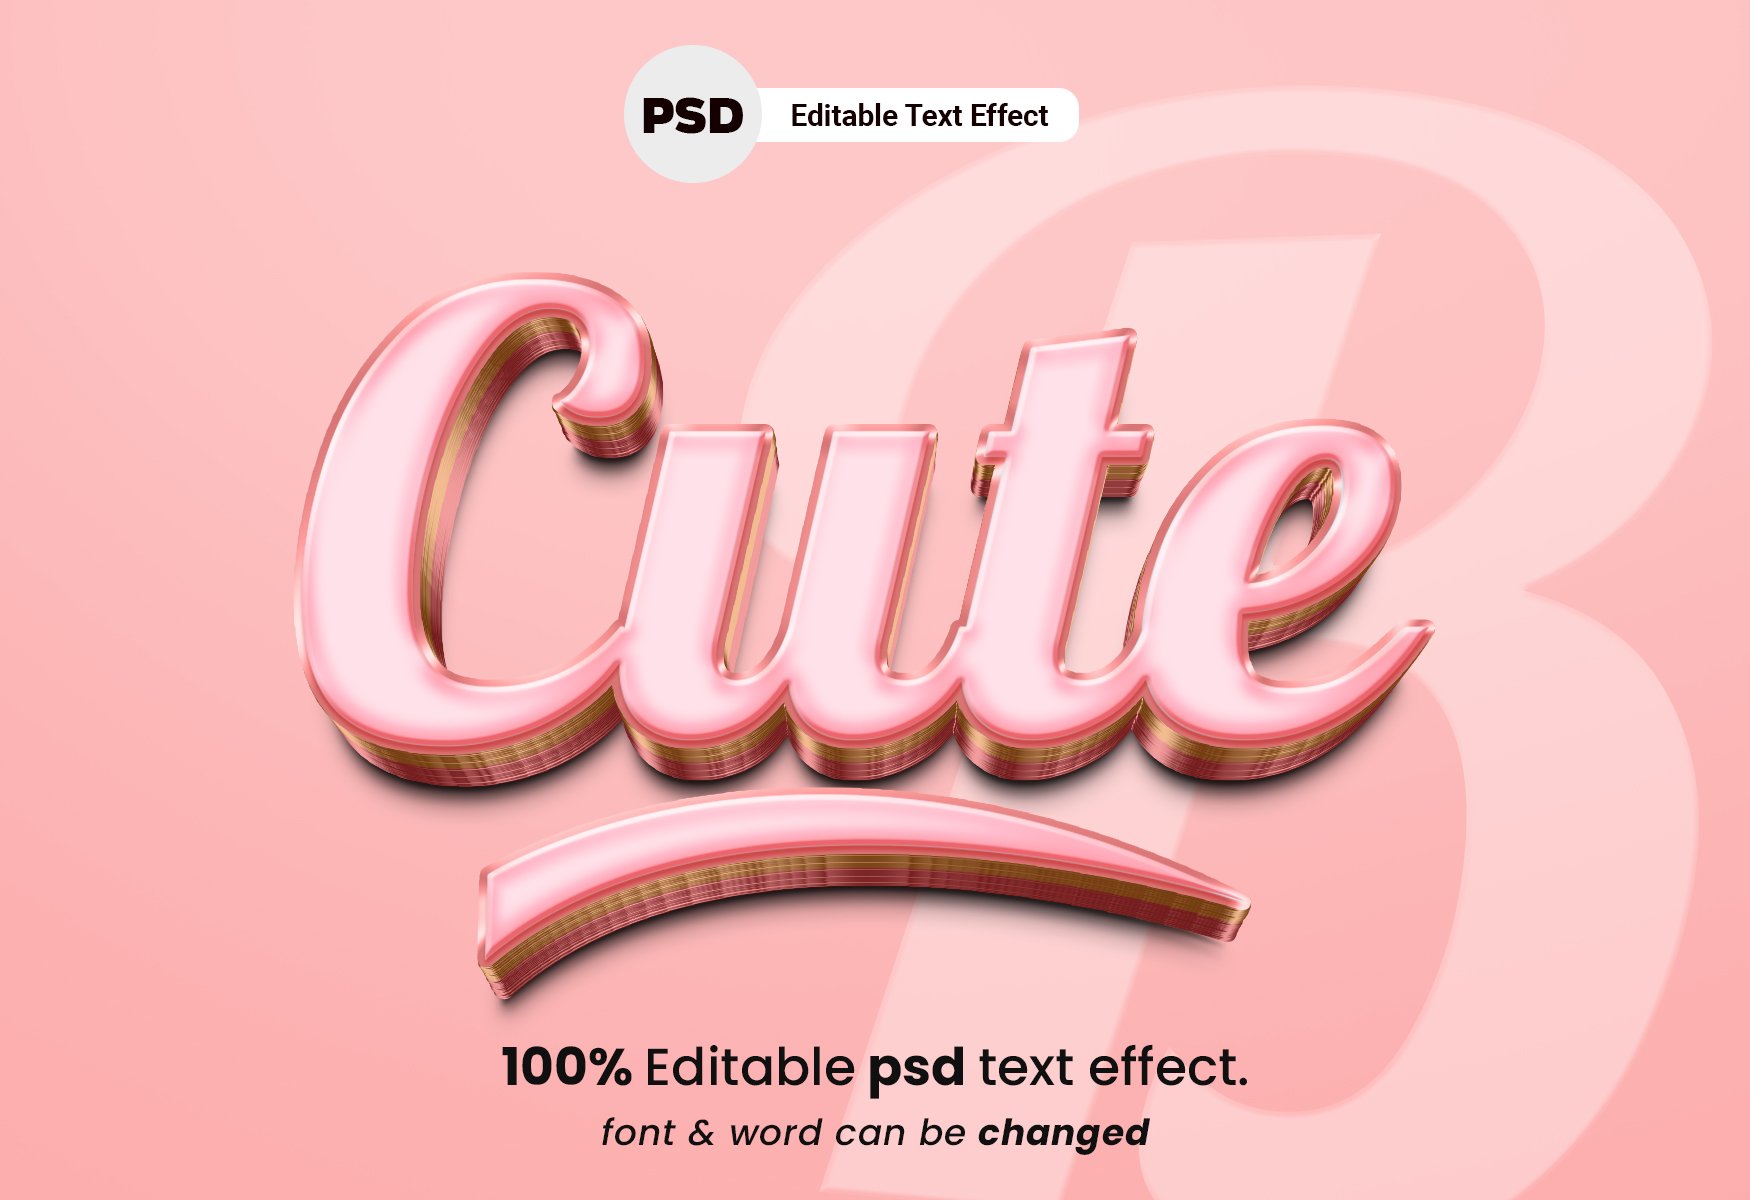 Cute 3D Editable PSD Text Effectcover image.